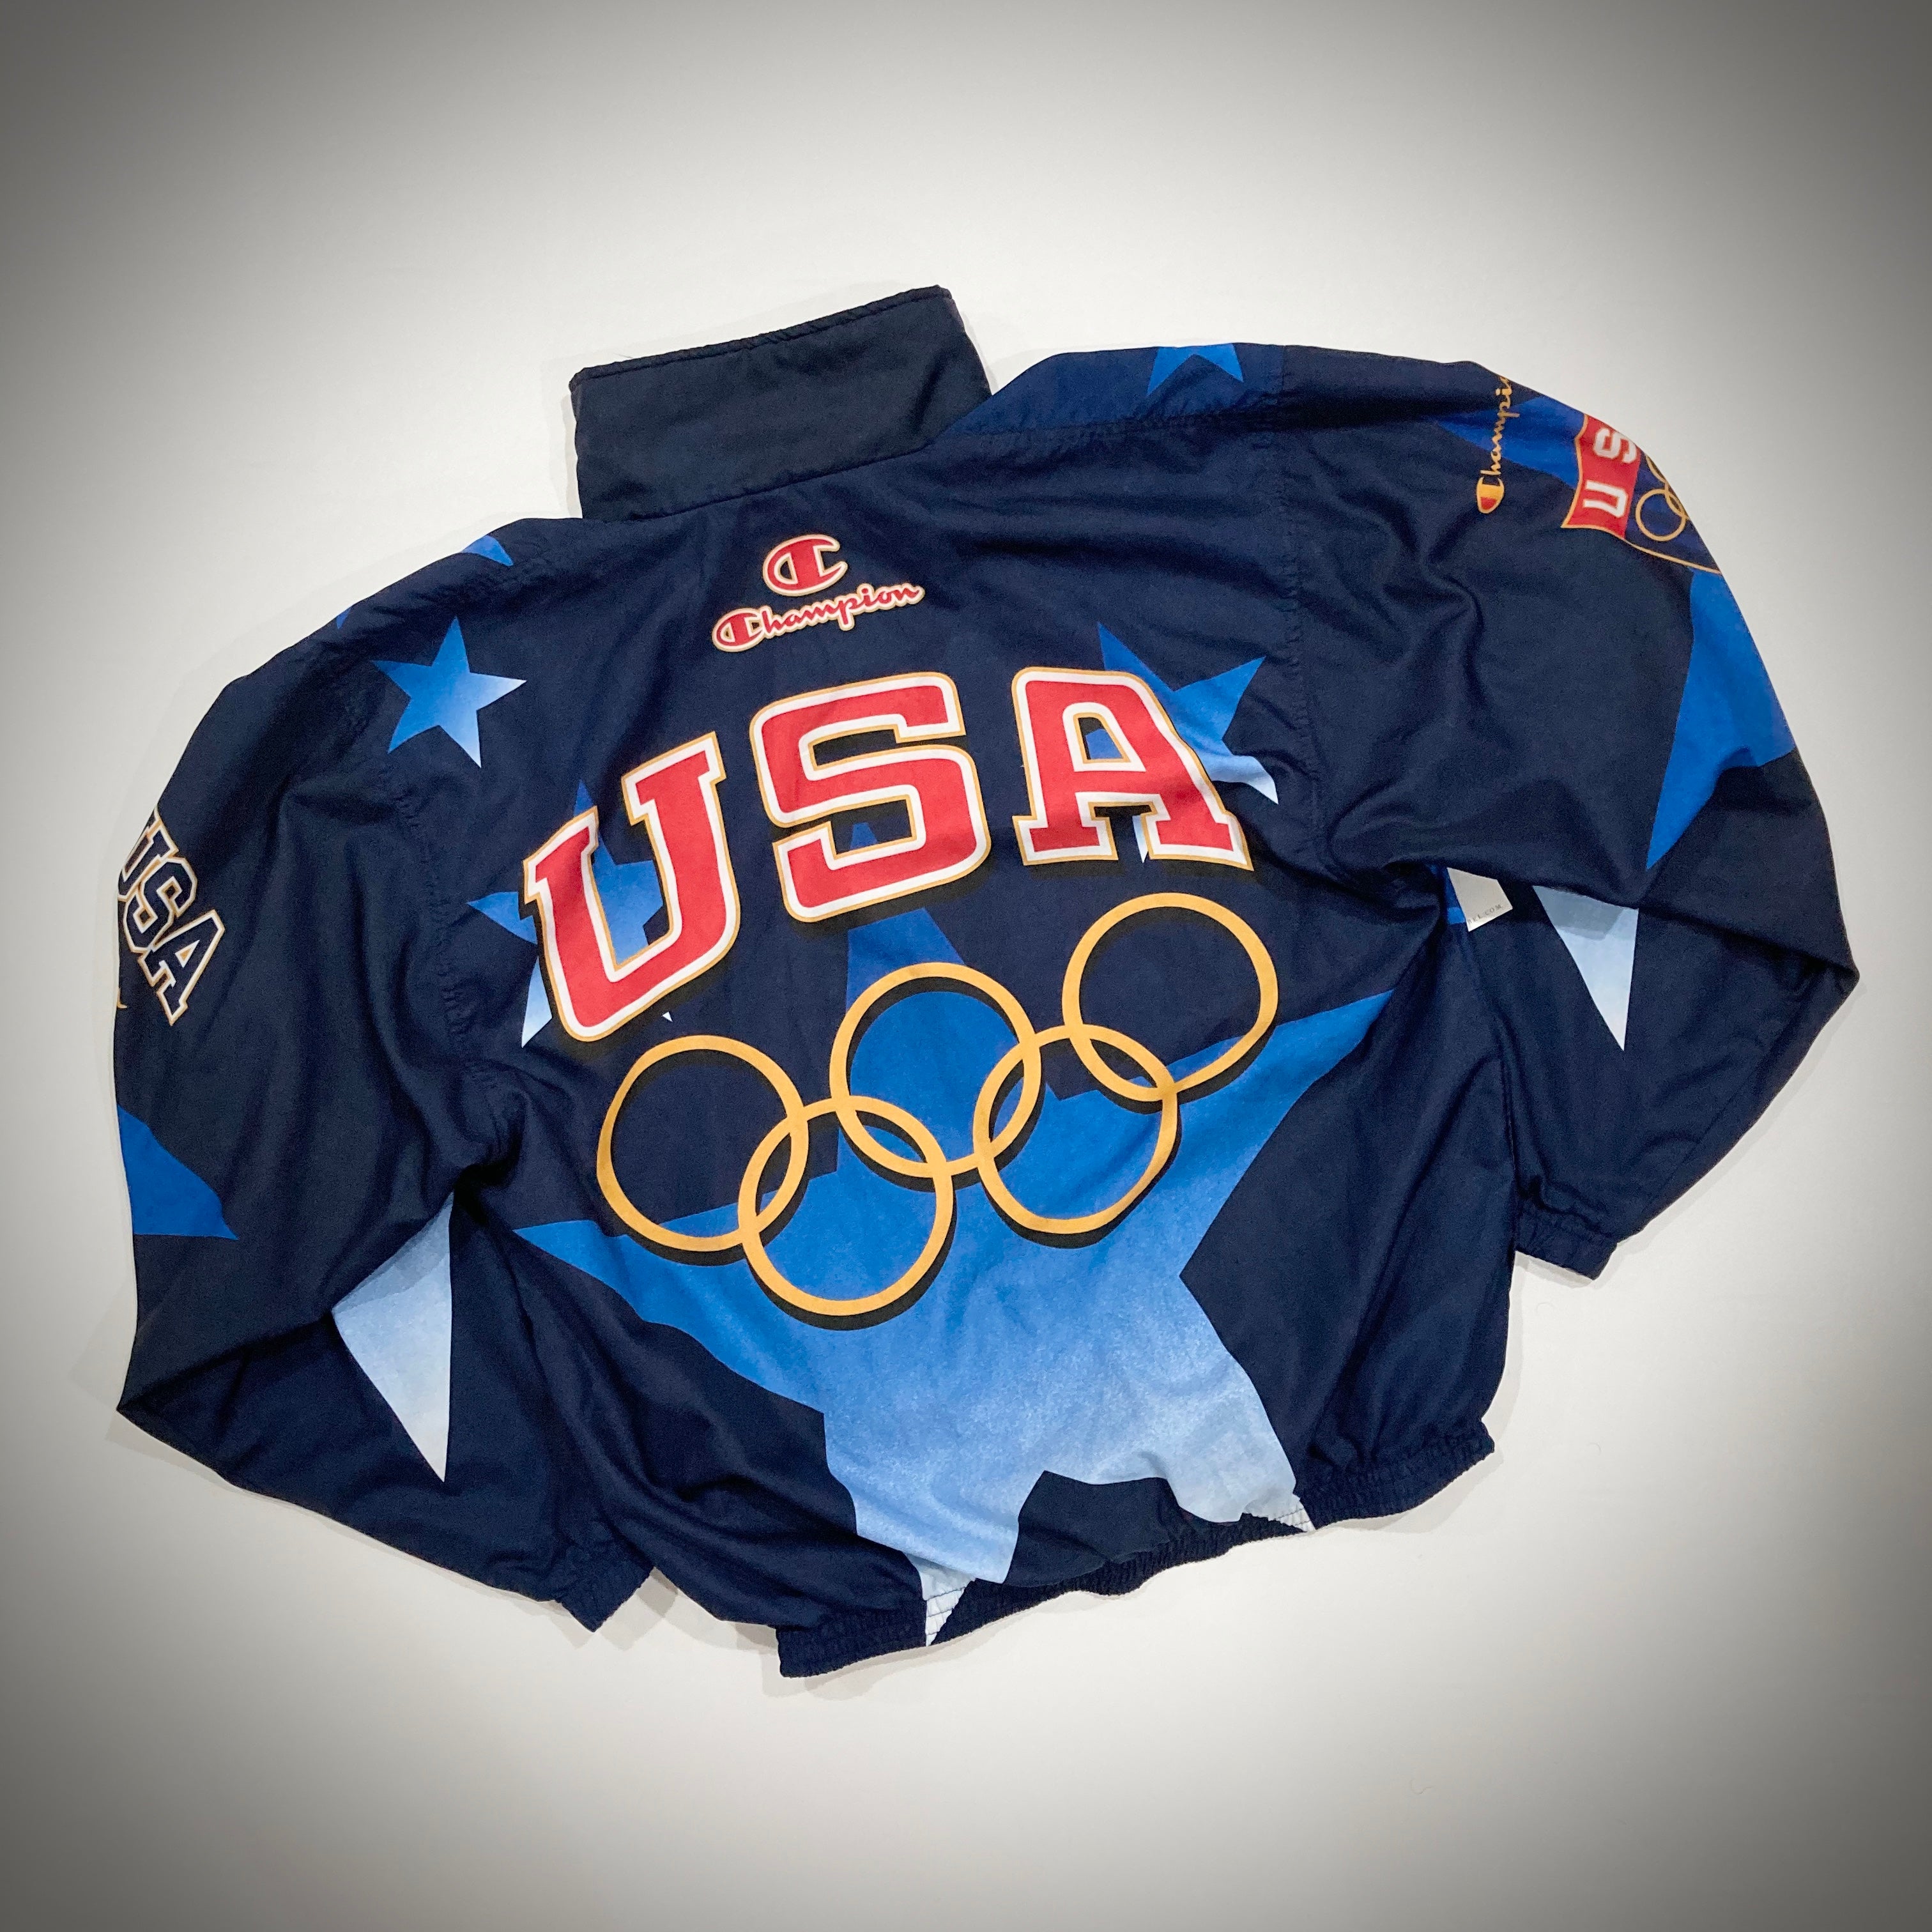 Vintage 1996 Olympic Champion Jacket